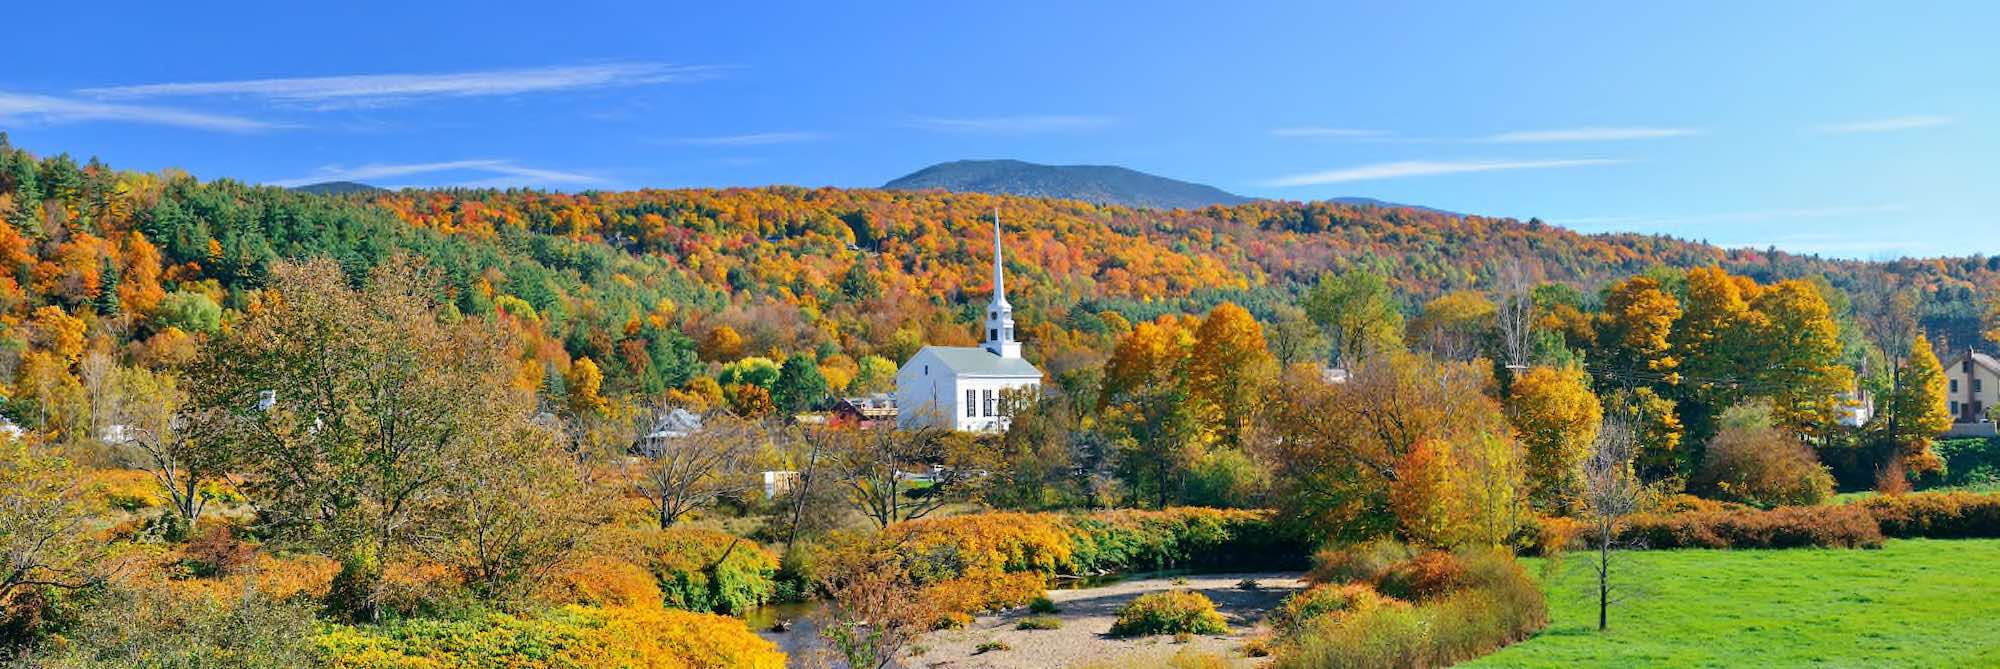 Stowe in Vermont/Neuengland © AdobeStock 108047810 rabbit75_fot